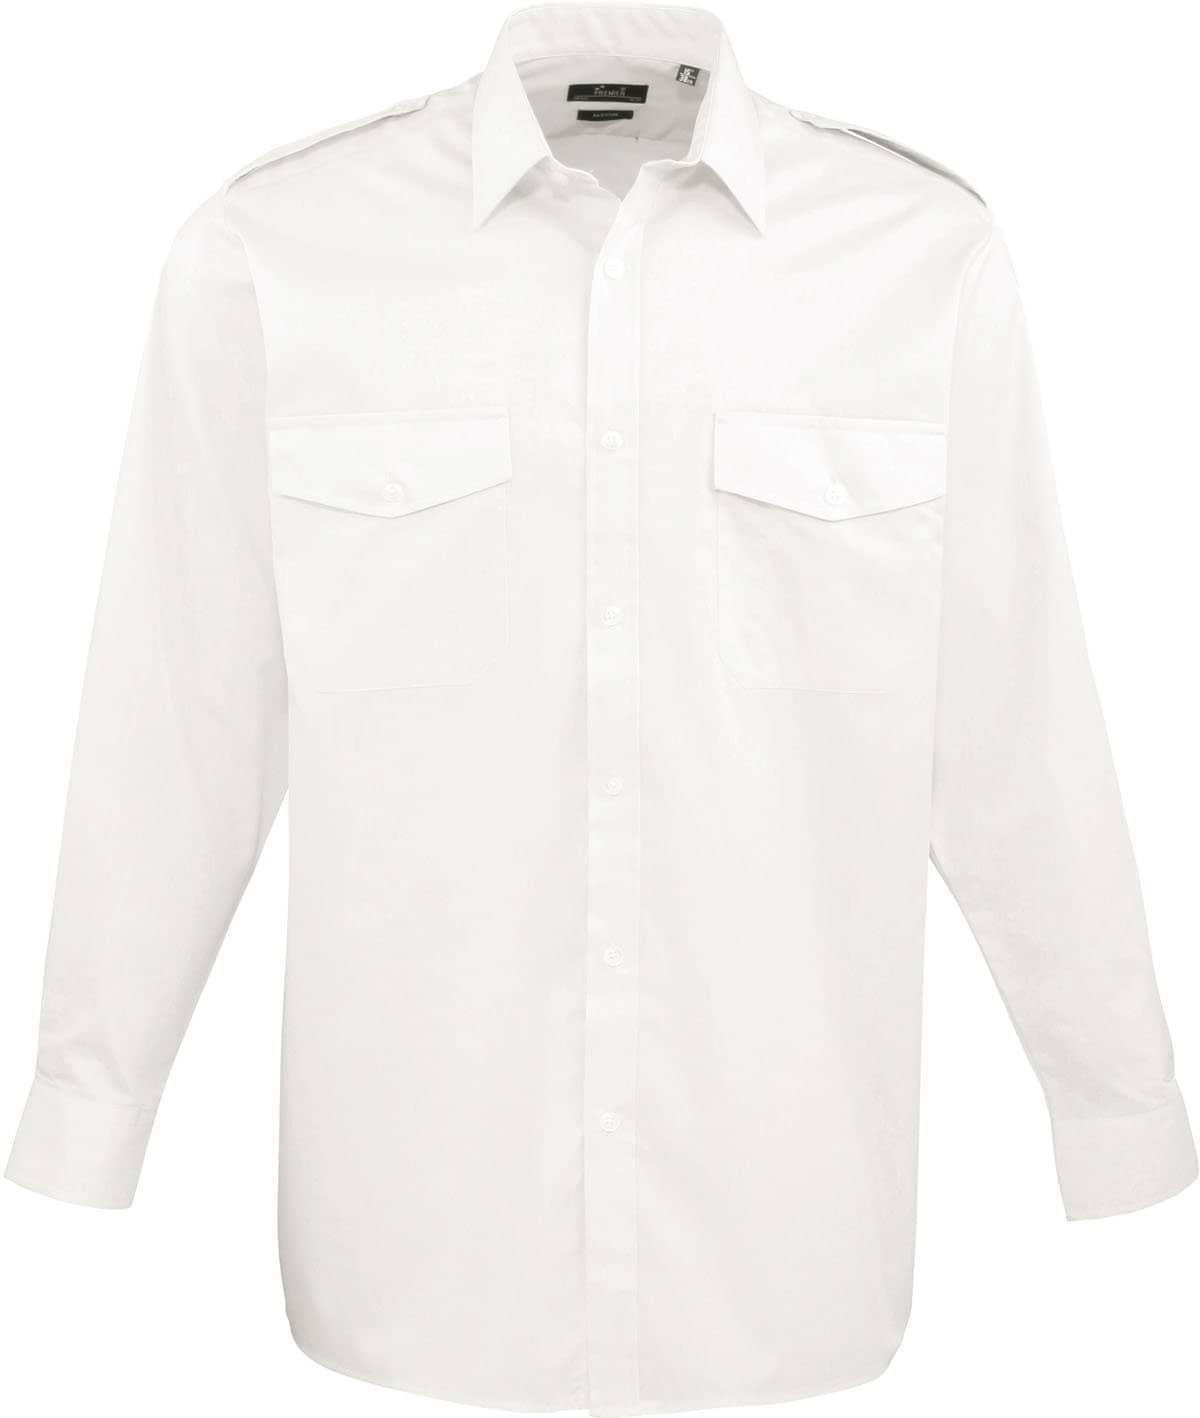 Premier Workwear Pilot Shirt Longsleeve